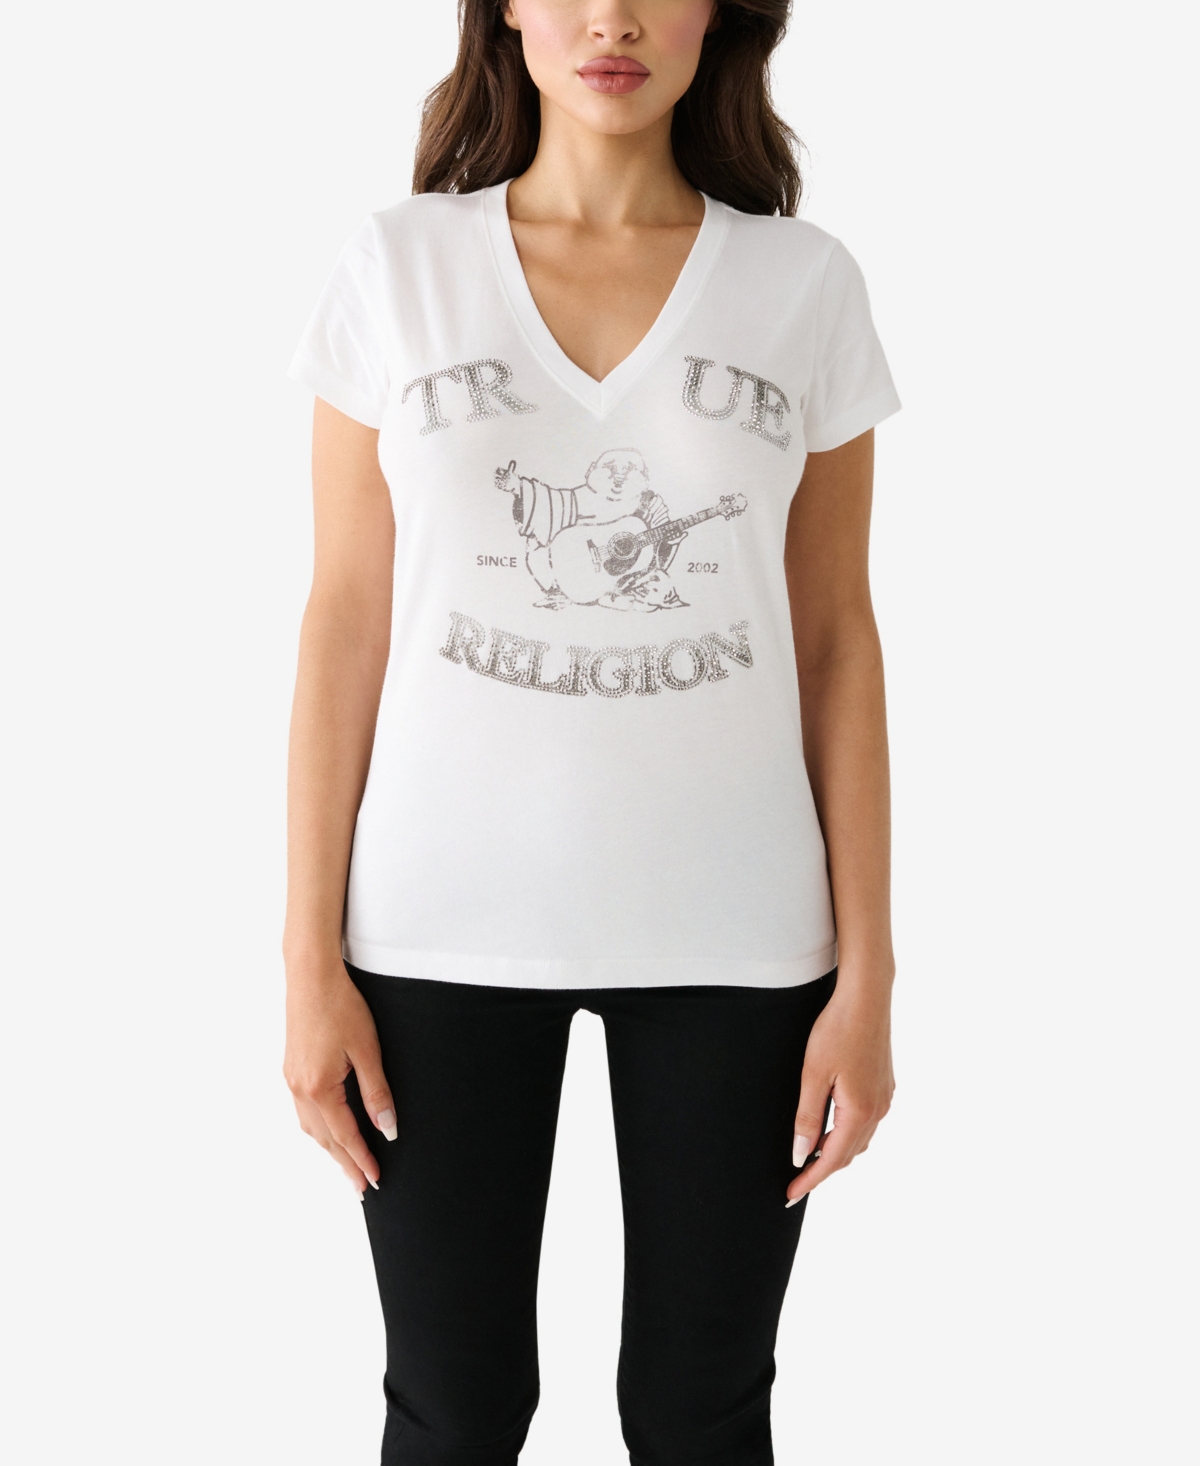 True Religion Women's Short Sleeve Crystal Wing Horseshoe T-shirt In Optic White